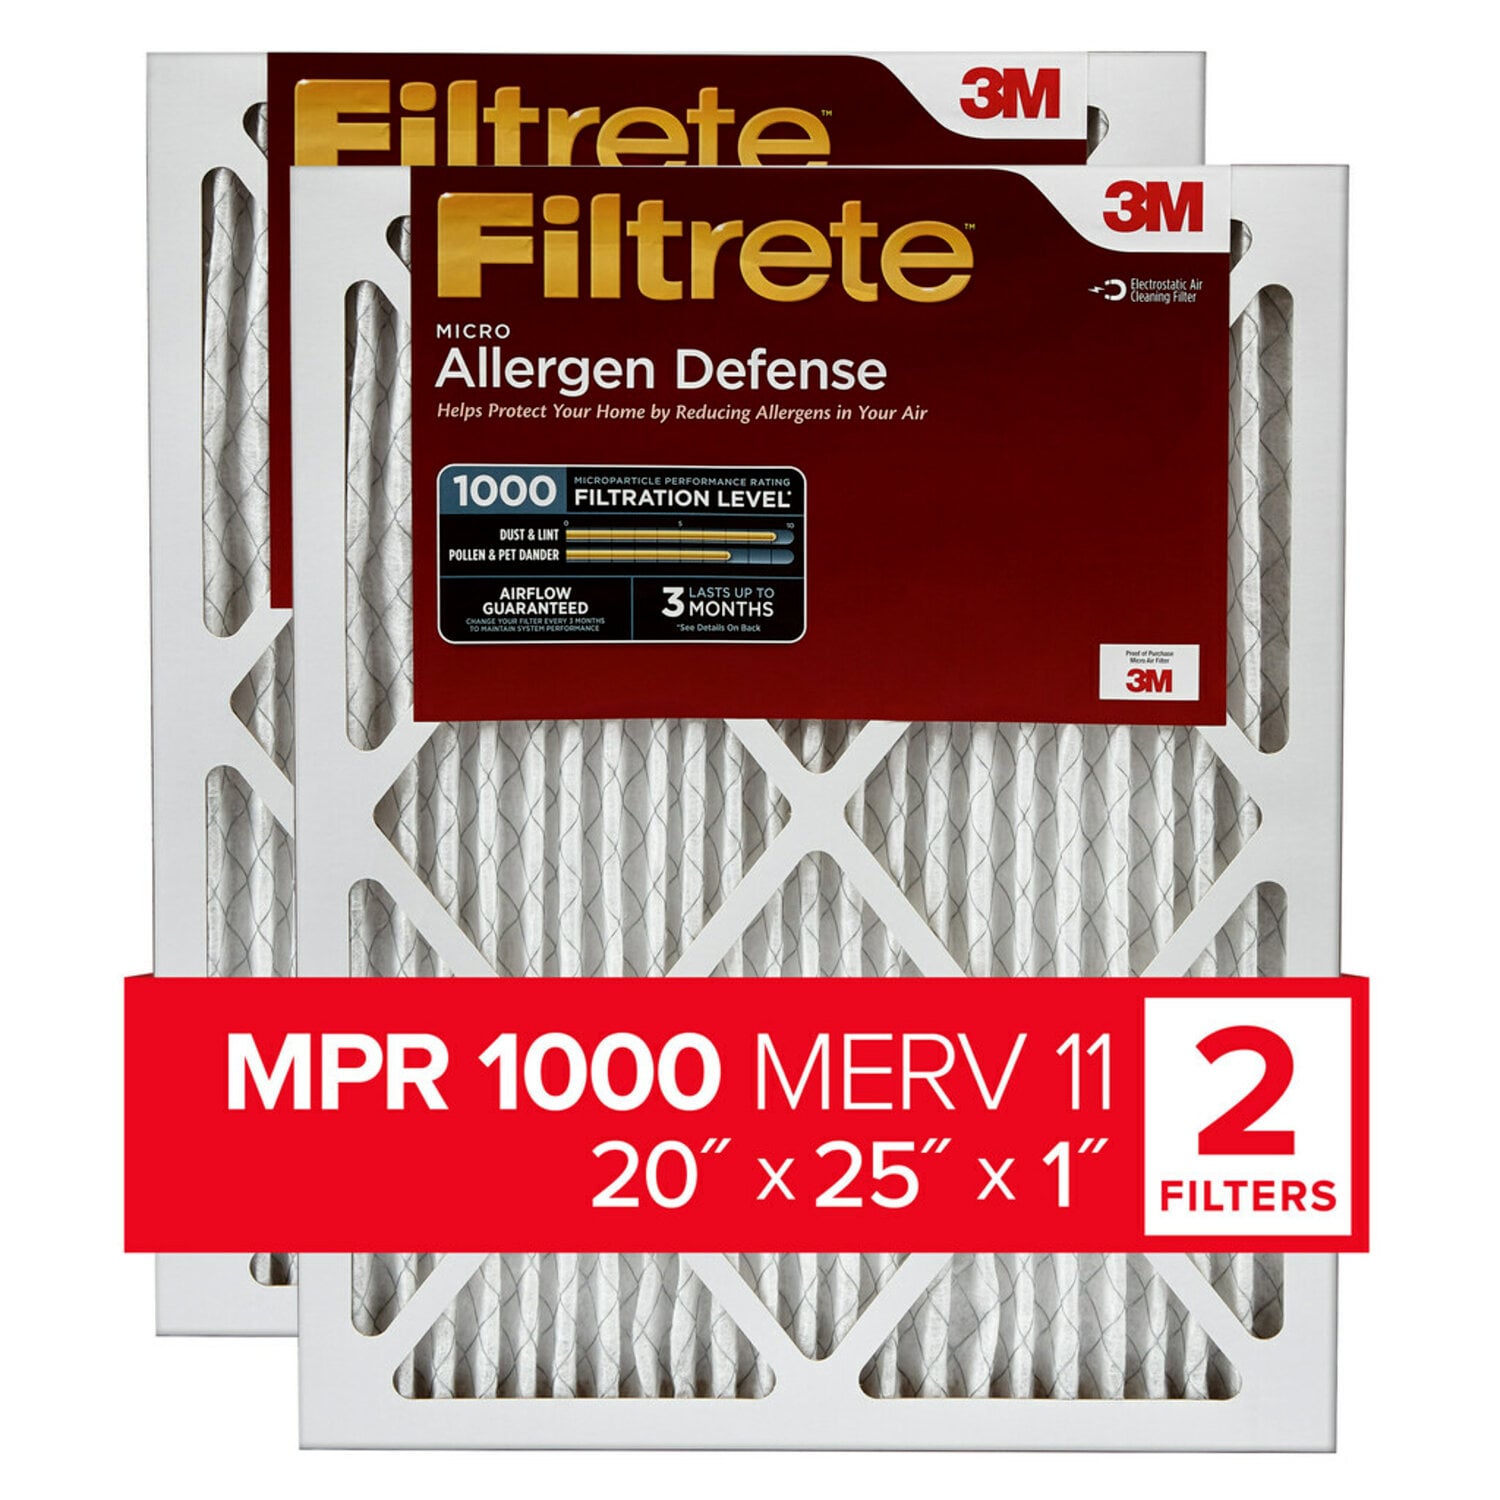 7100212119 - Filtrete Allergen Defense Filter AD03-2PK-1E, 20 in x 25 in x 1 in (50.8 cm x 63.5 cm x 2.5 cm) ,